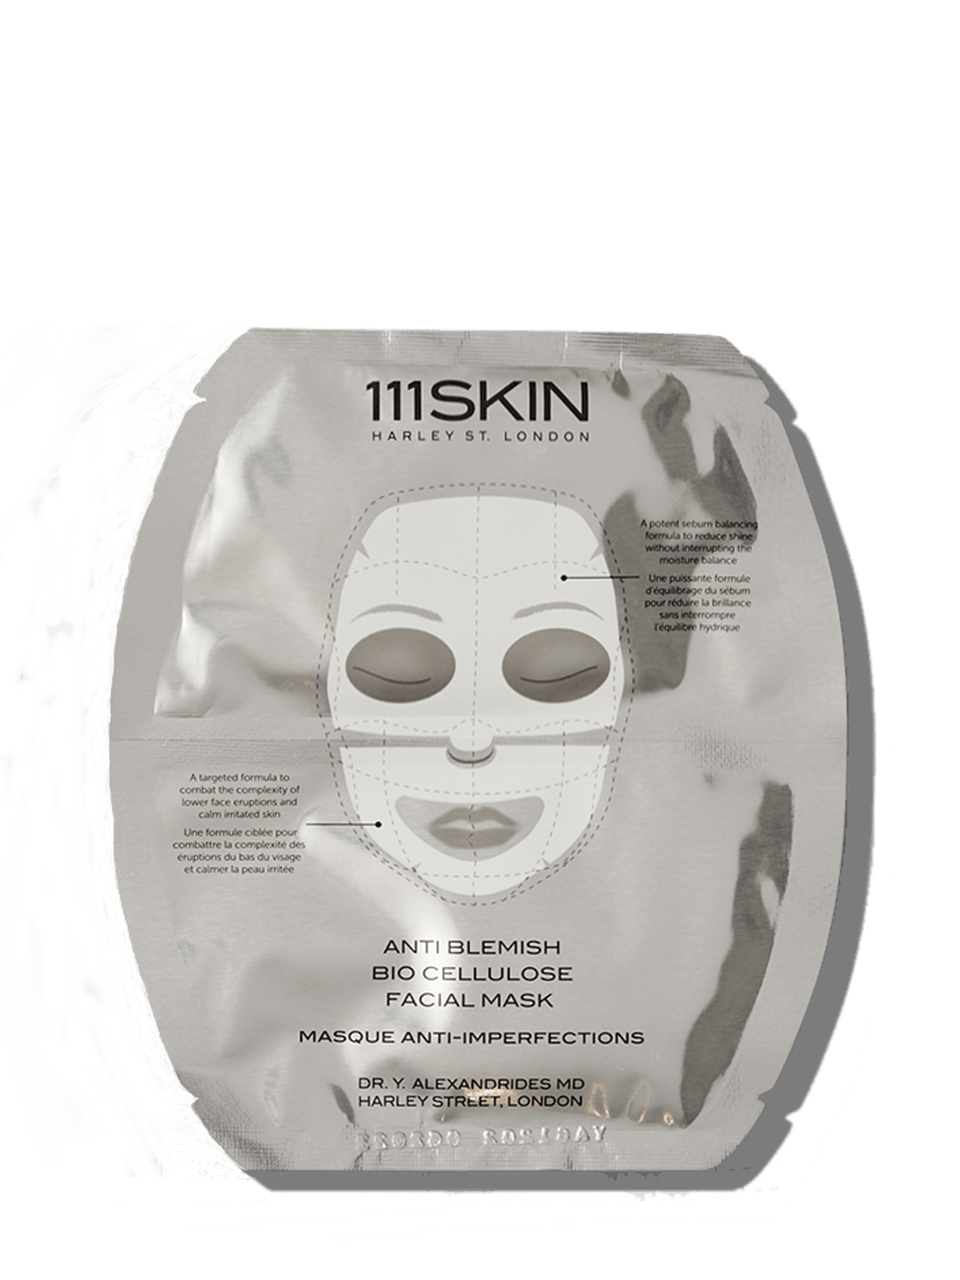 Anti Blemish Bio Cellulose Facial Mask SKINCARE 111Skin 1 